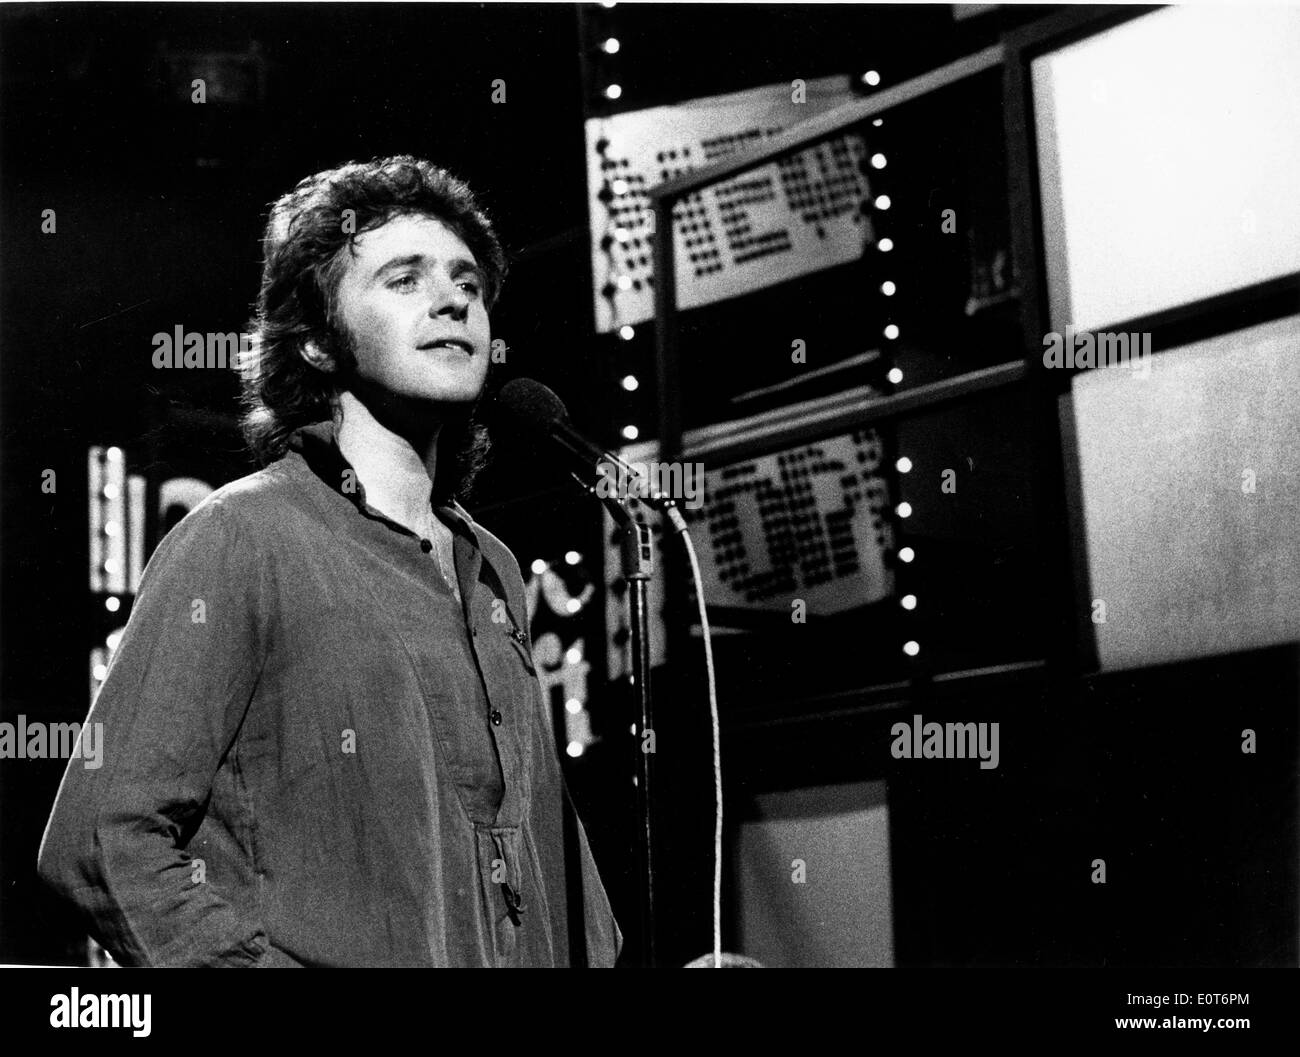 David Essex on stage singing Stock Photo